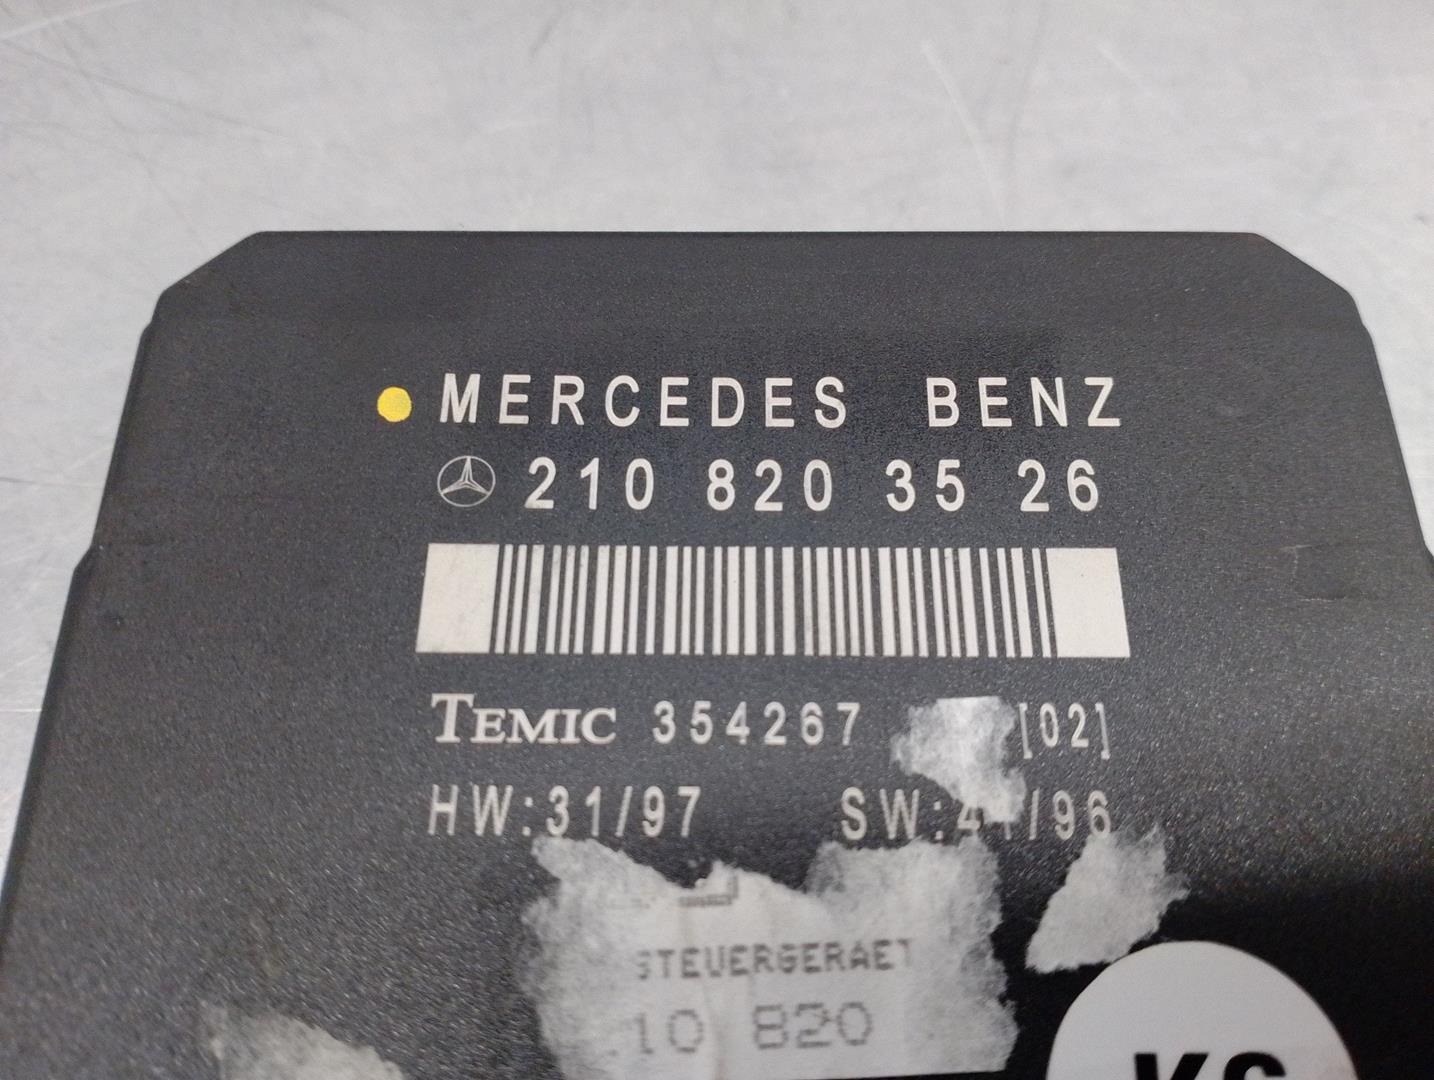 MERCEDES-BENZ E-Class W210 (1995-2002) Other Control Units 2108203526, 354267, TEMIC 19914876